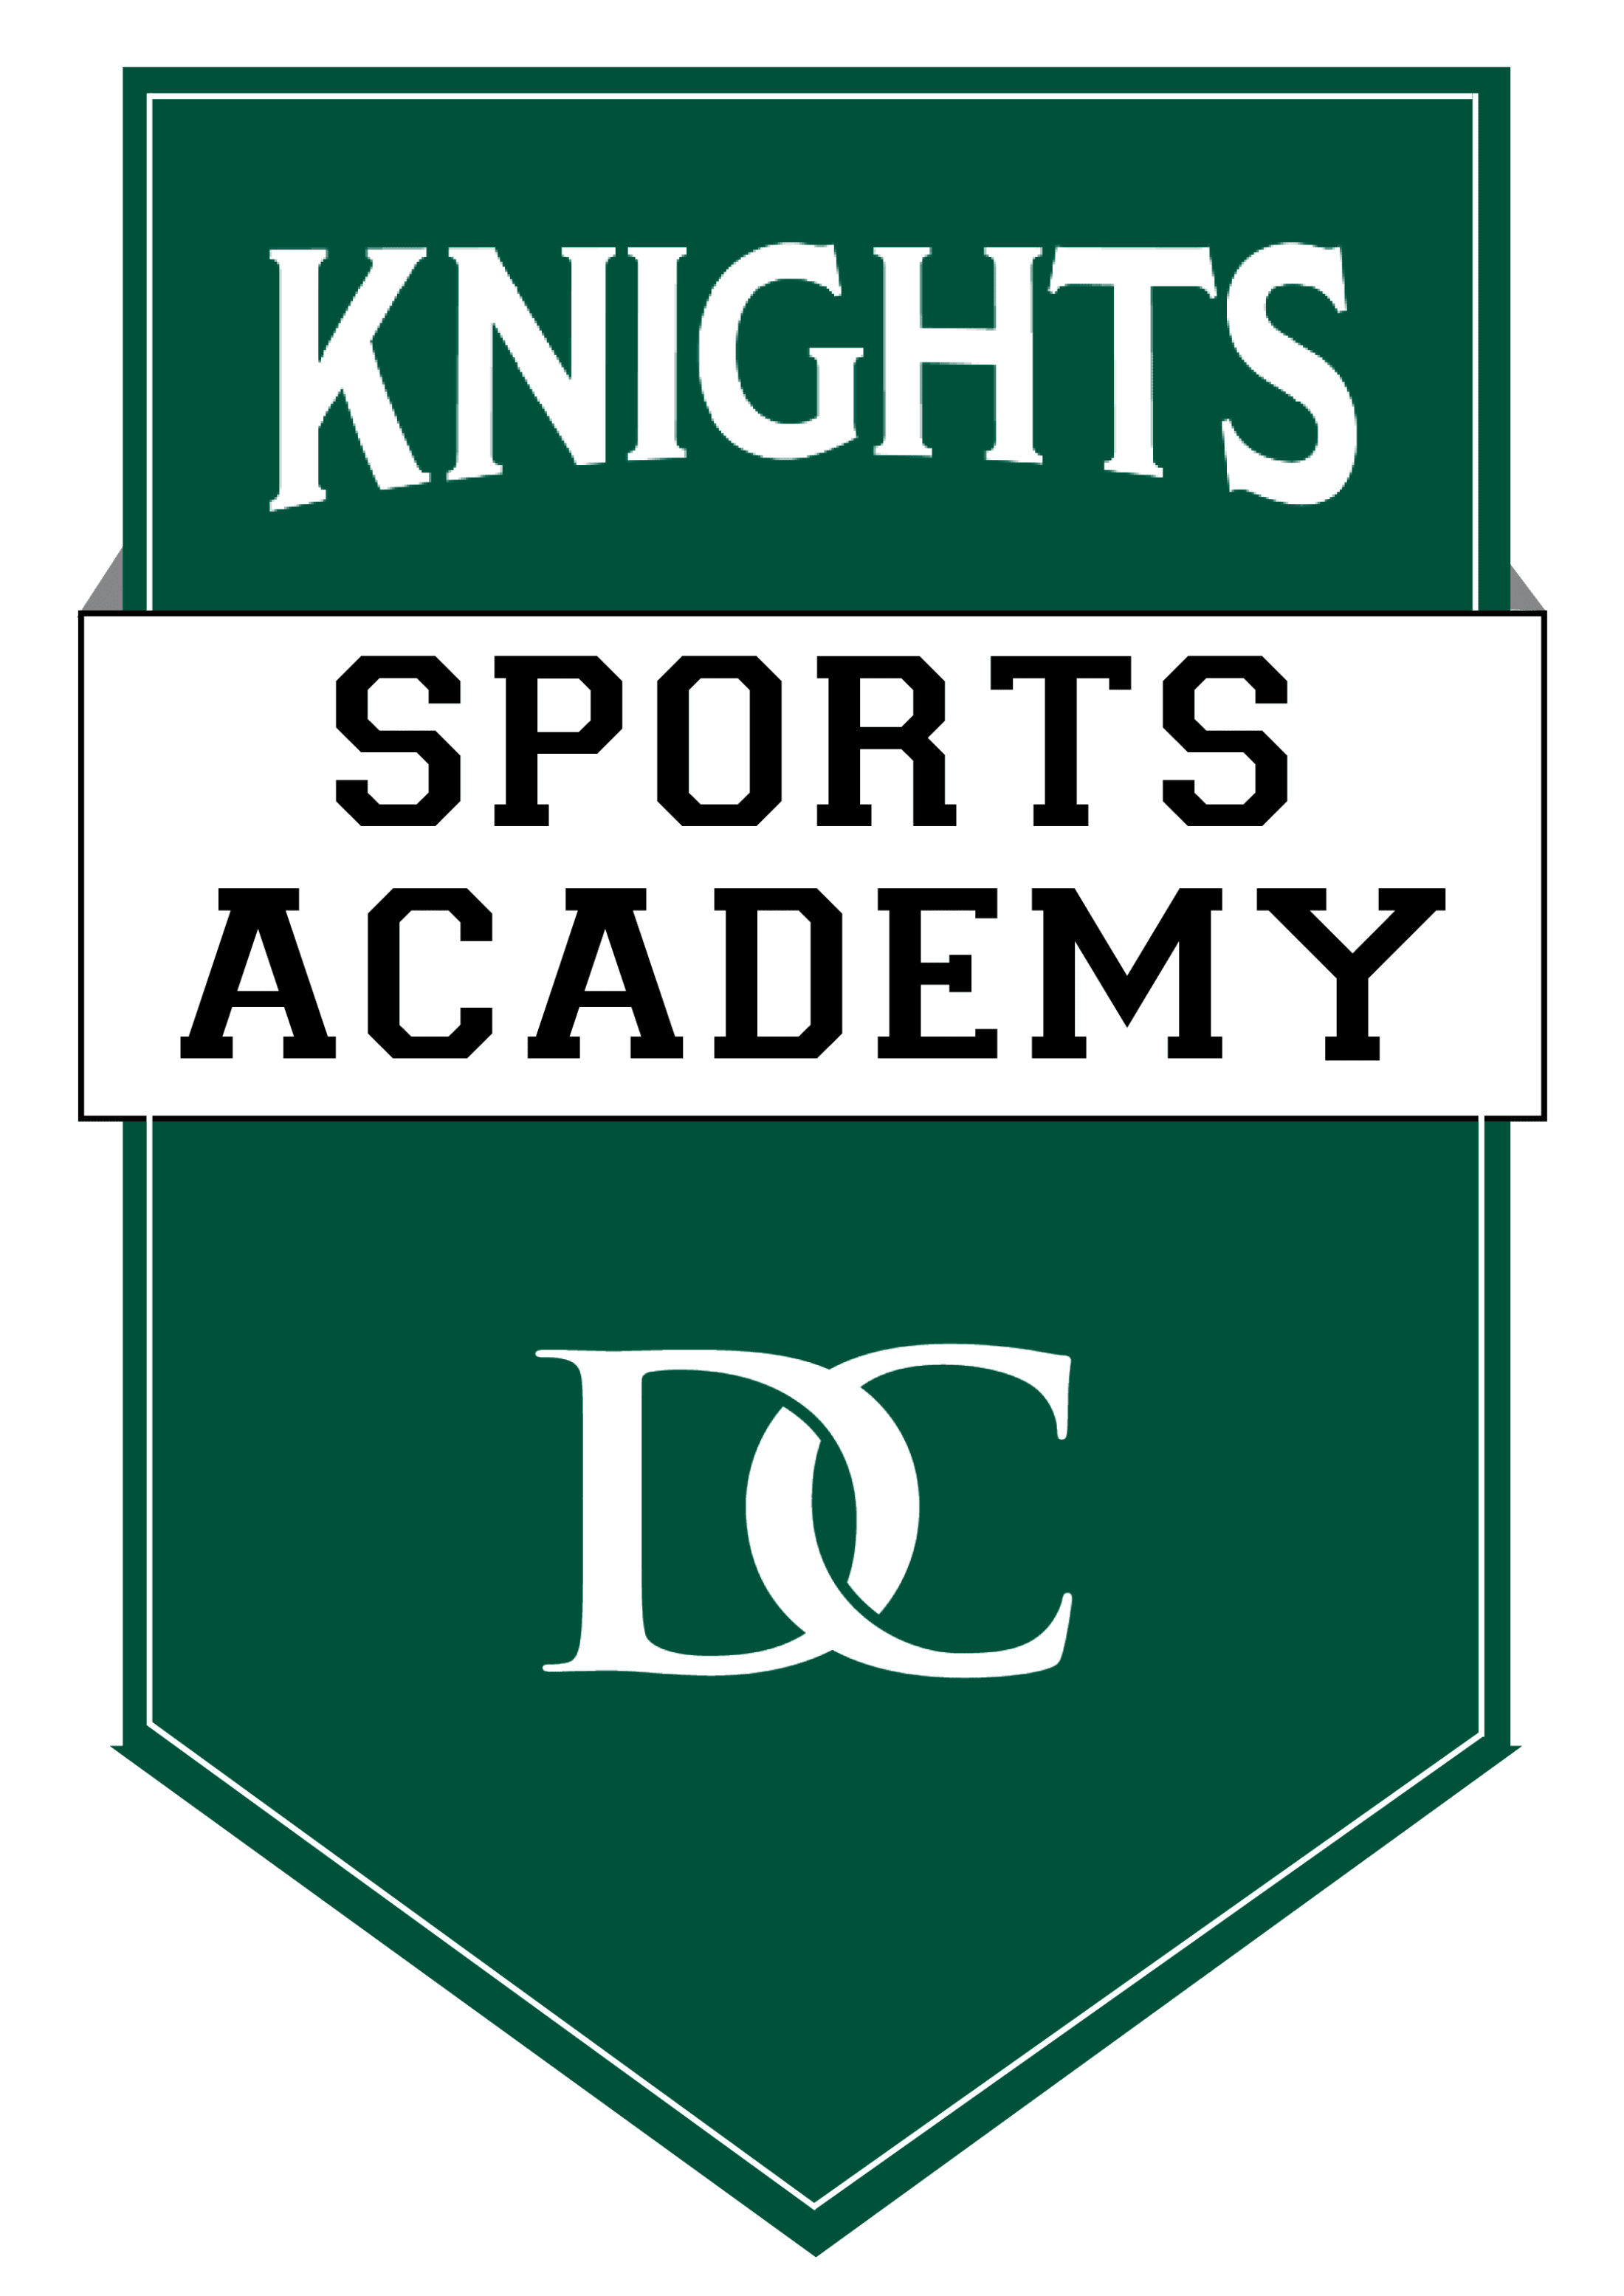 SA SPORTS ACADEMY - Sports Academy, LLC Trademark Registration